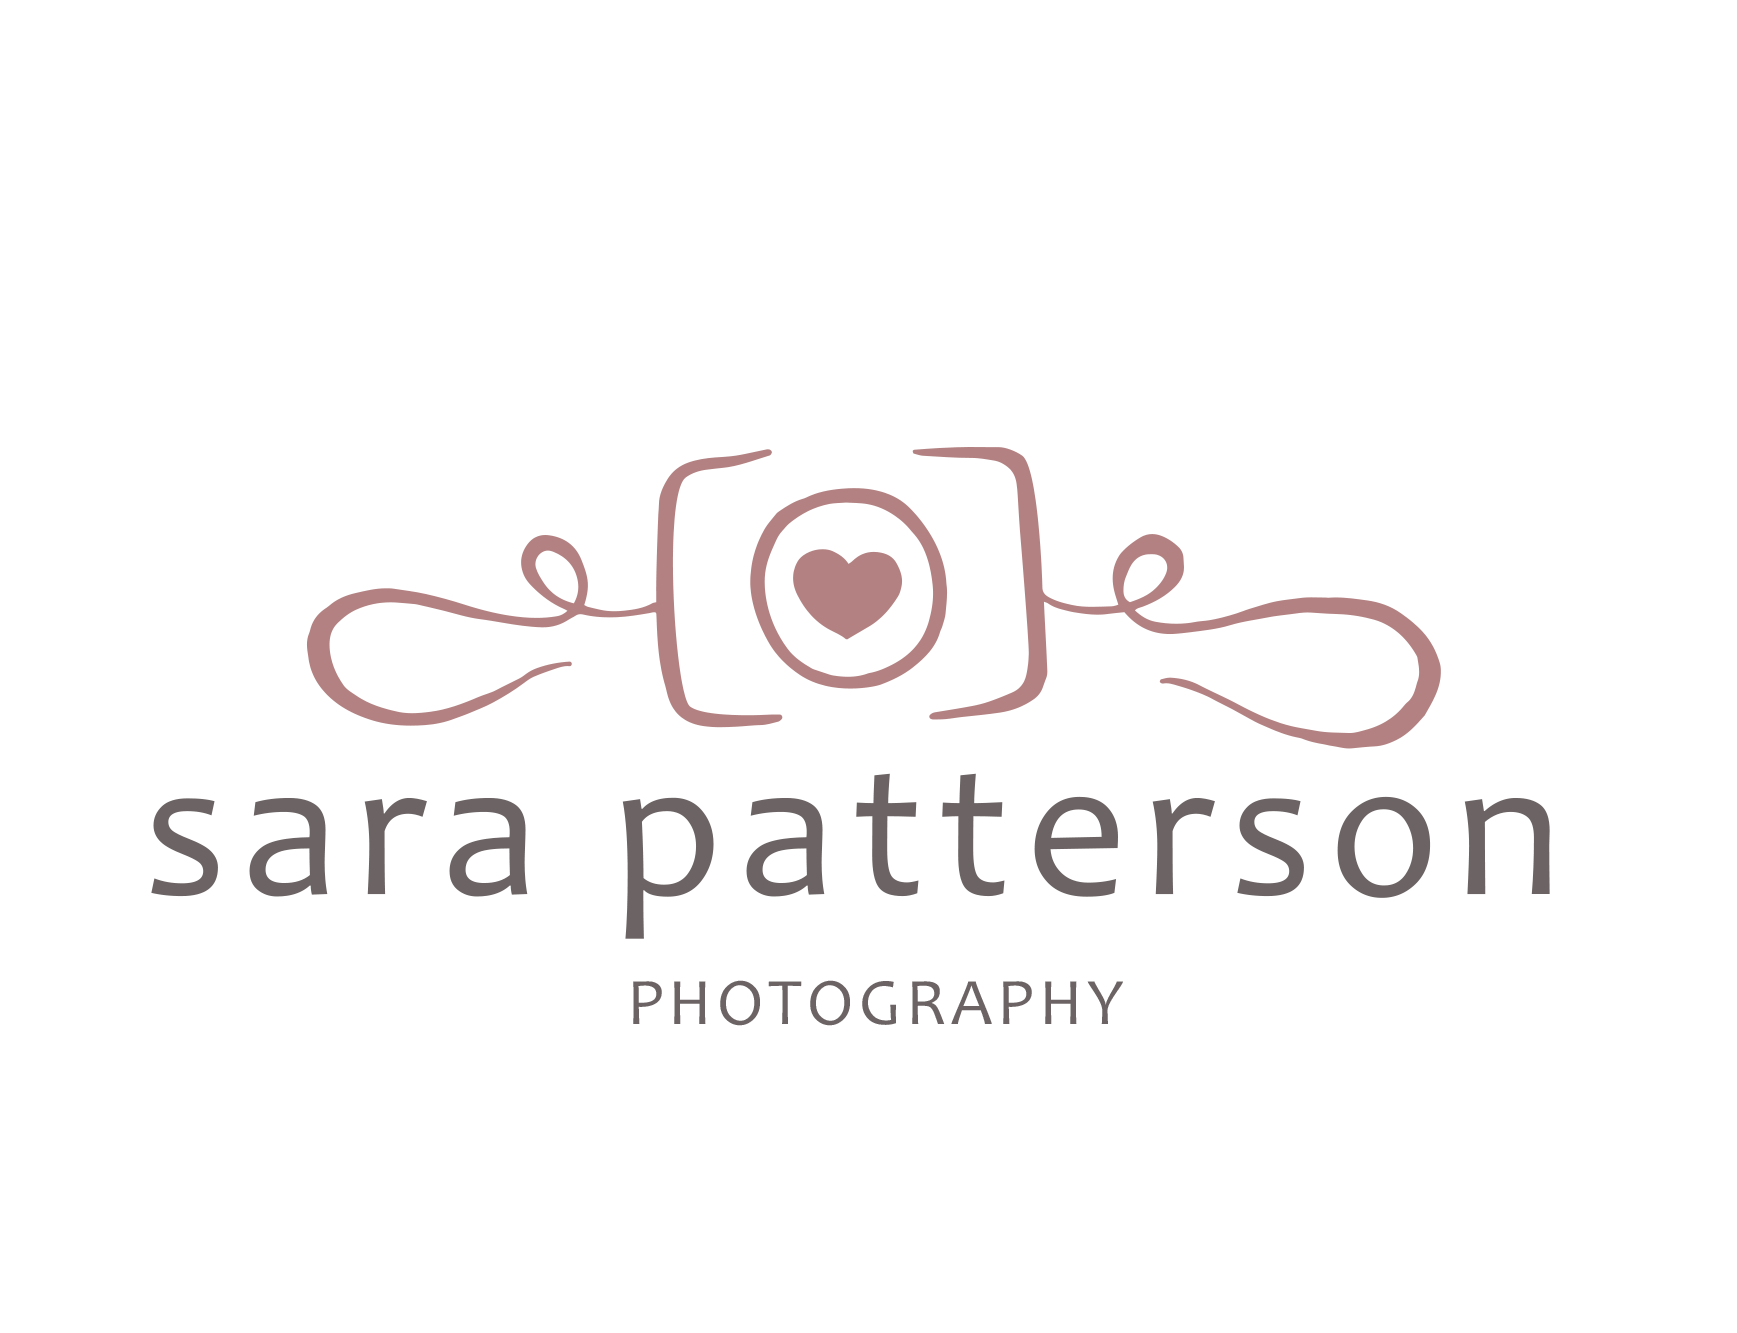 Sara Patterson Photography